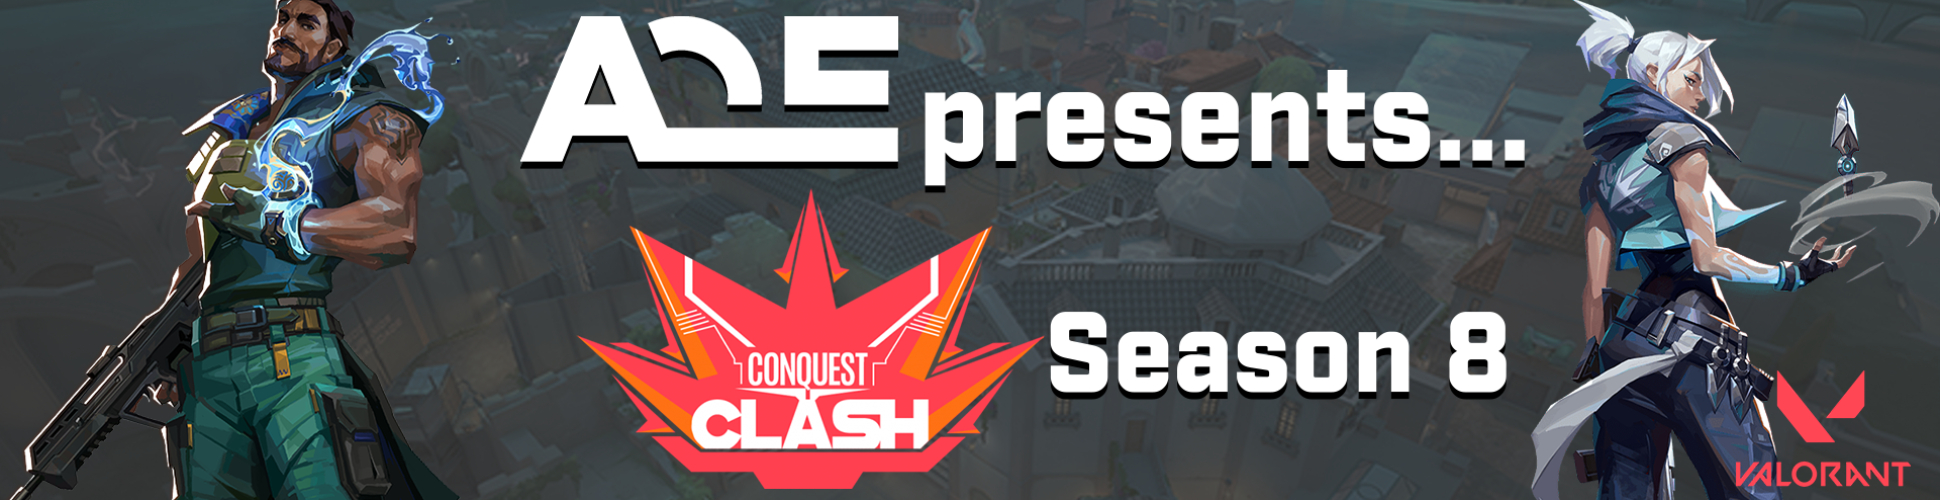 Conquest Clash S6